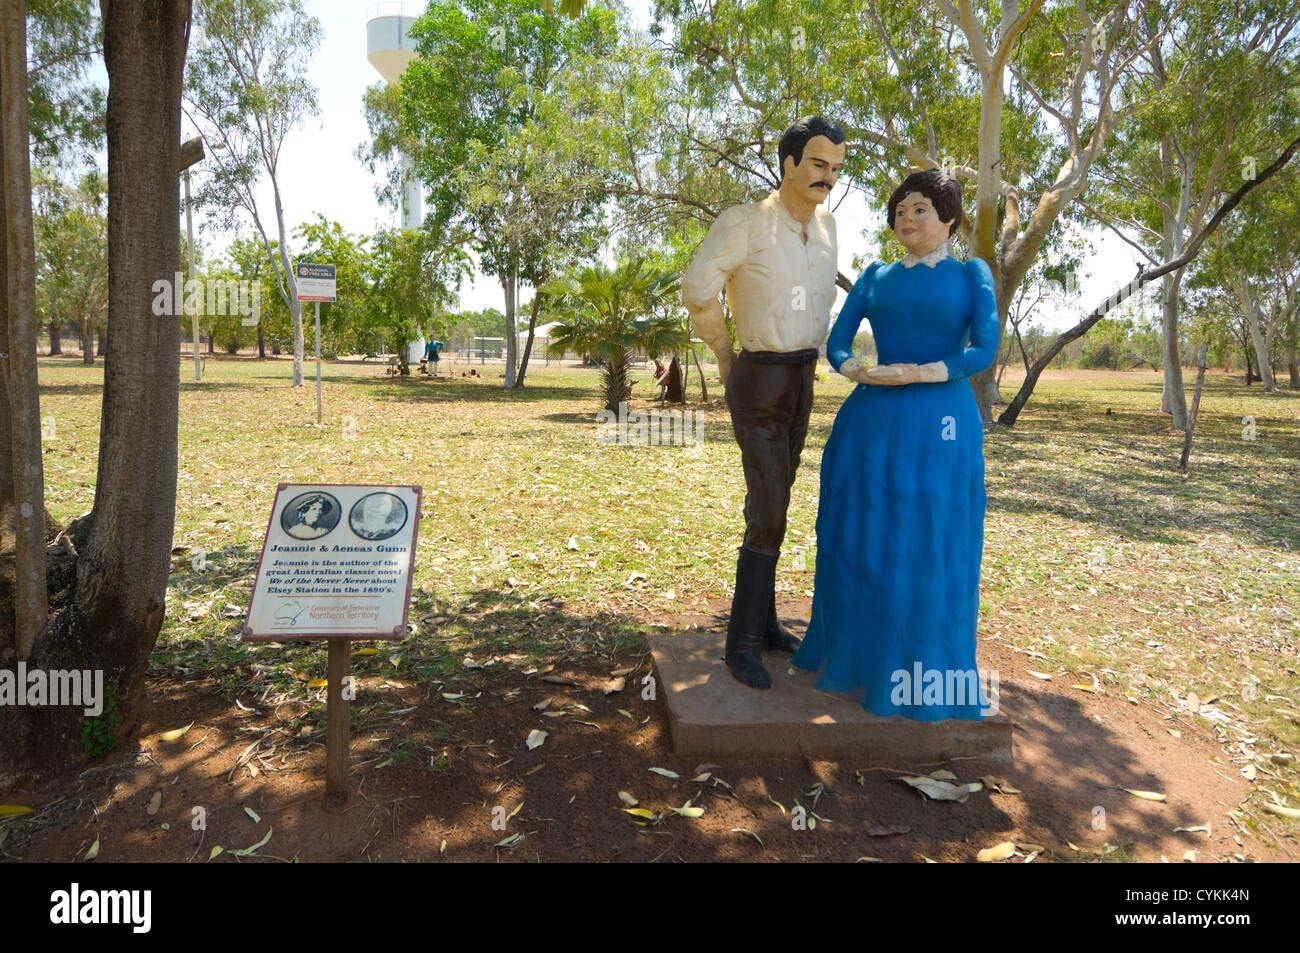 Statues of Jeannie and Aeneas Gunn, Mataranka, Northern Territory, Australia Stock Photo